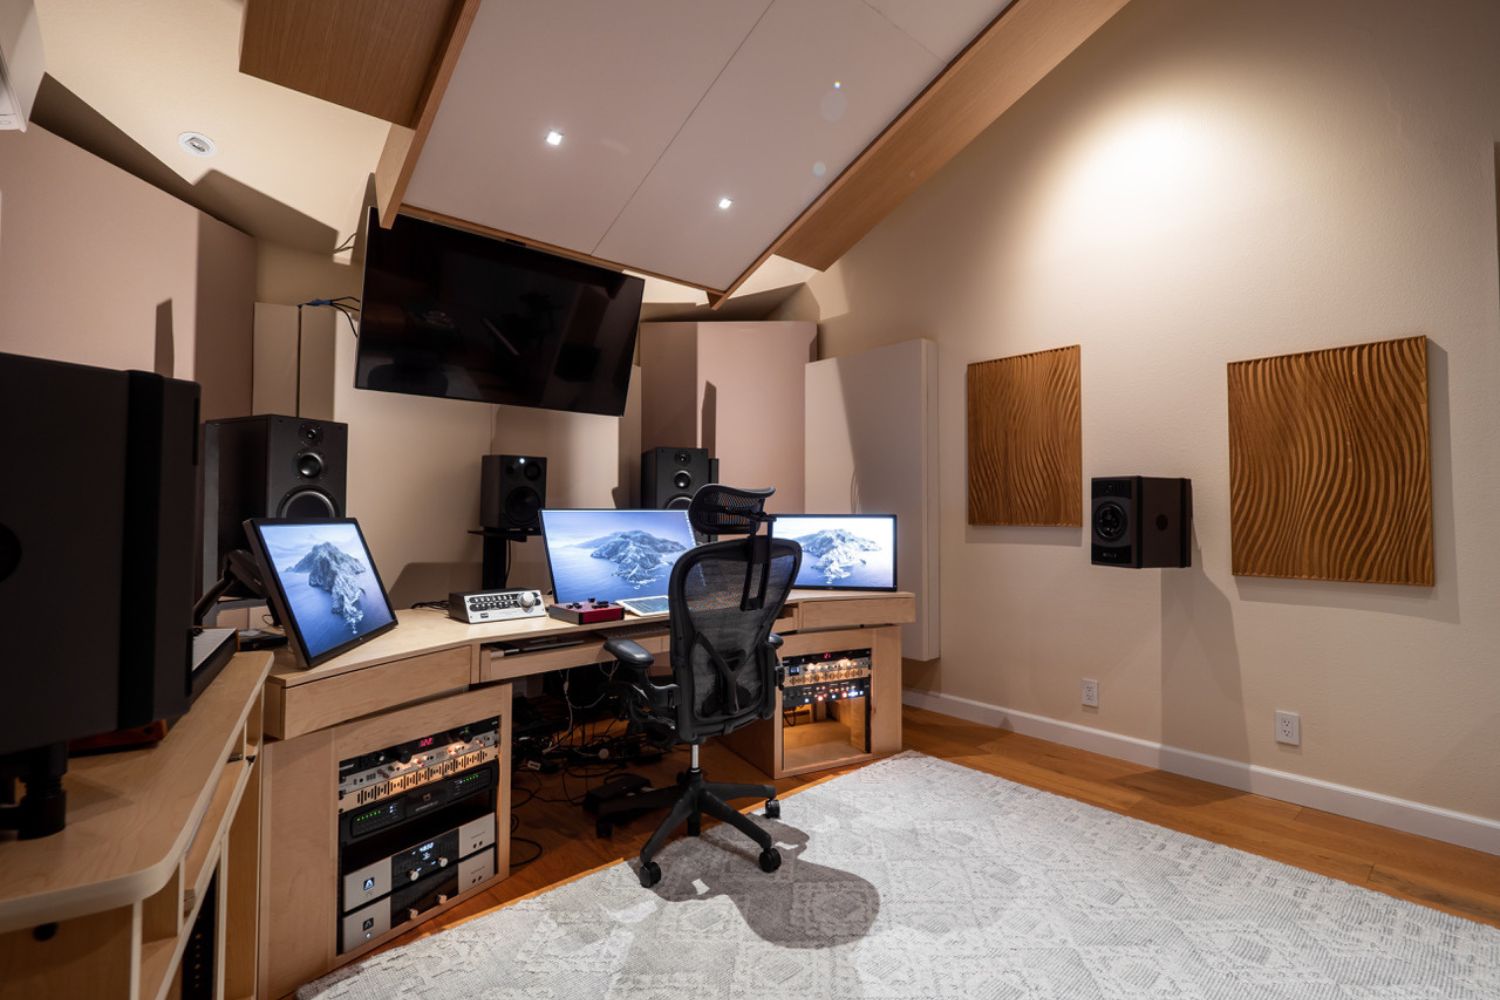 Solo Music Studio - WSDG